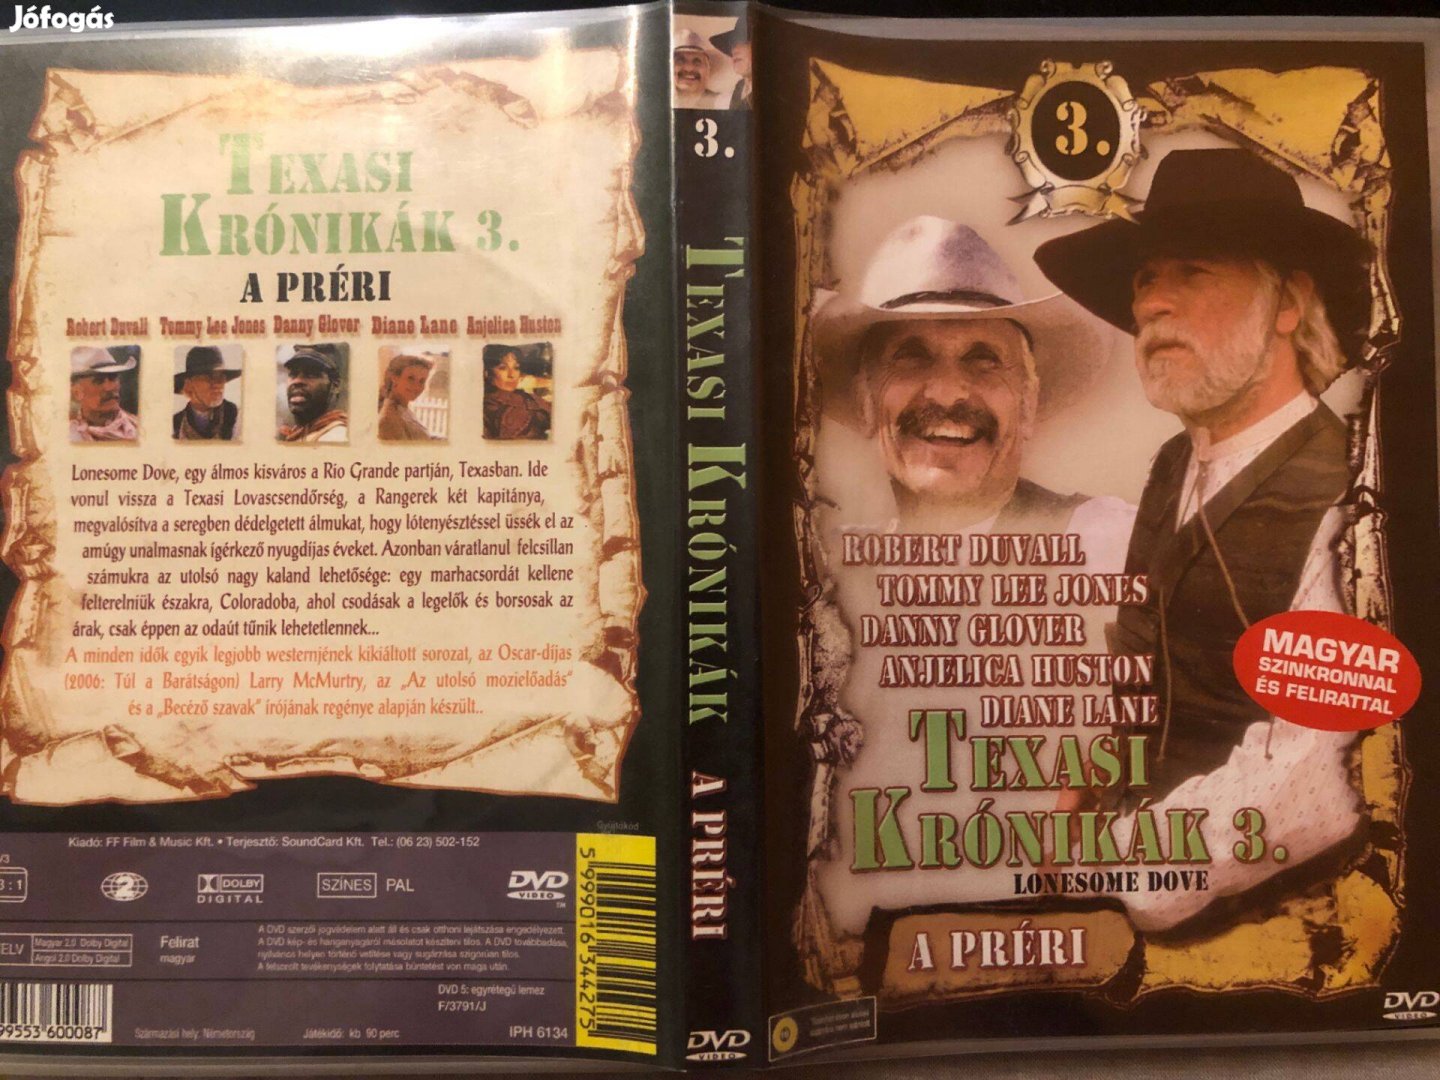 Texasi krónikák 3. (karcmentes, Robert Duvall) DVD